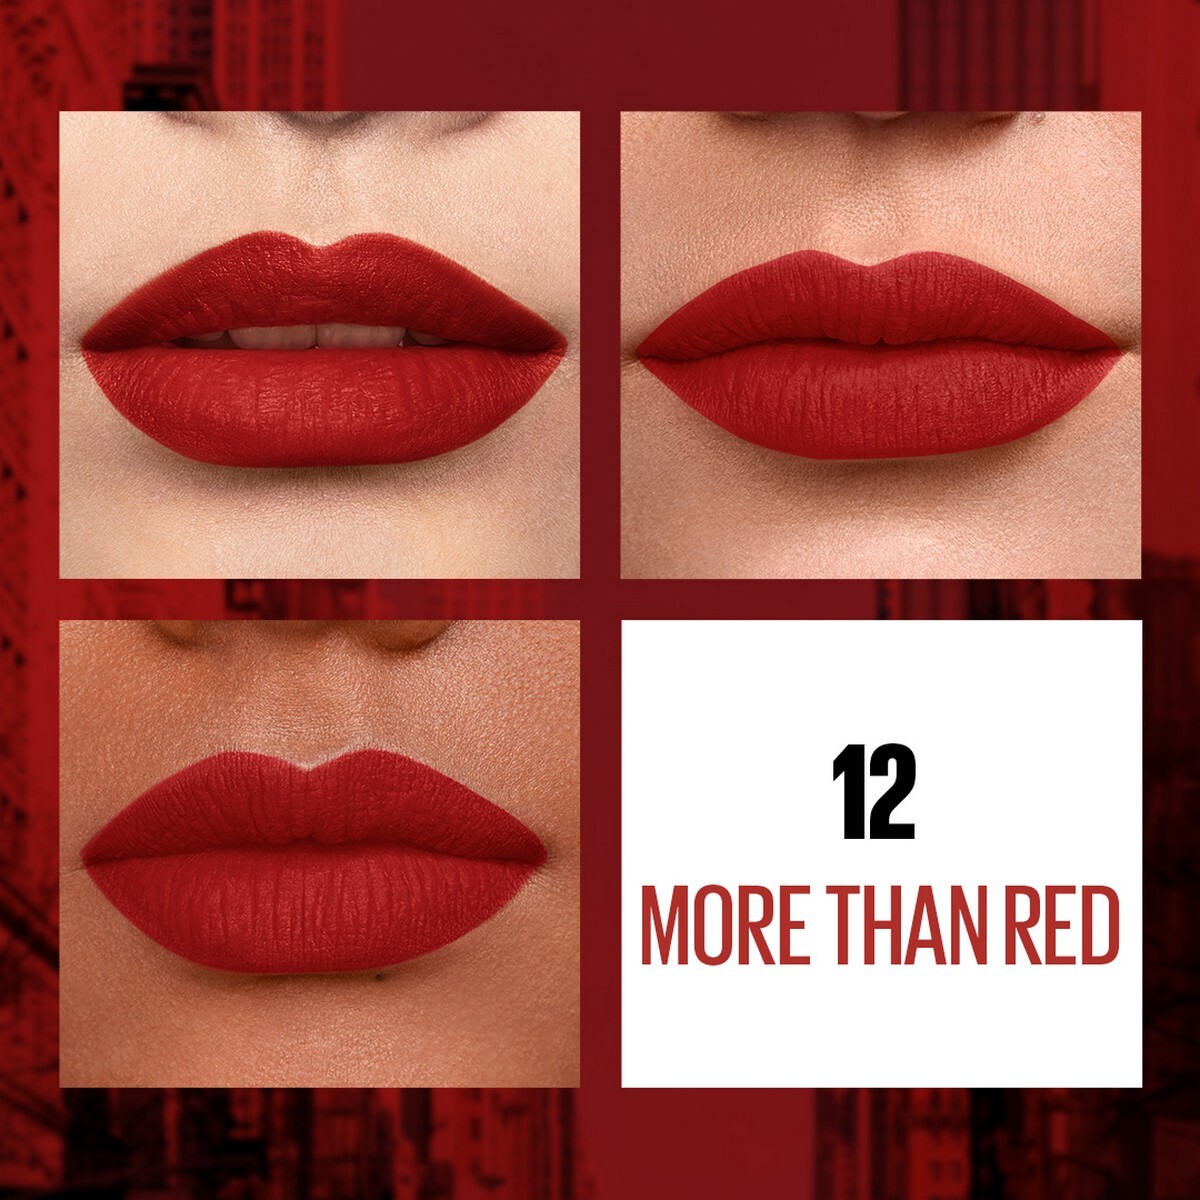 Maybelline New York Sensational Liquid Matte Lipstick, 12 More than Red, 7ml - Liquid Lipstick Shades Delivering Intense Matte Color Effect